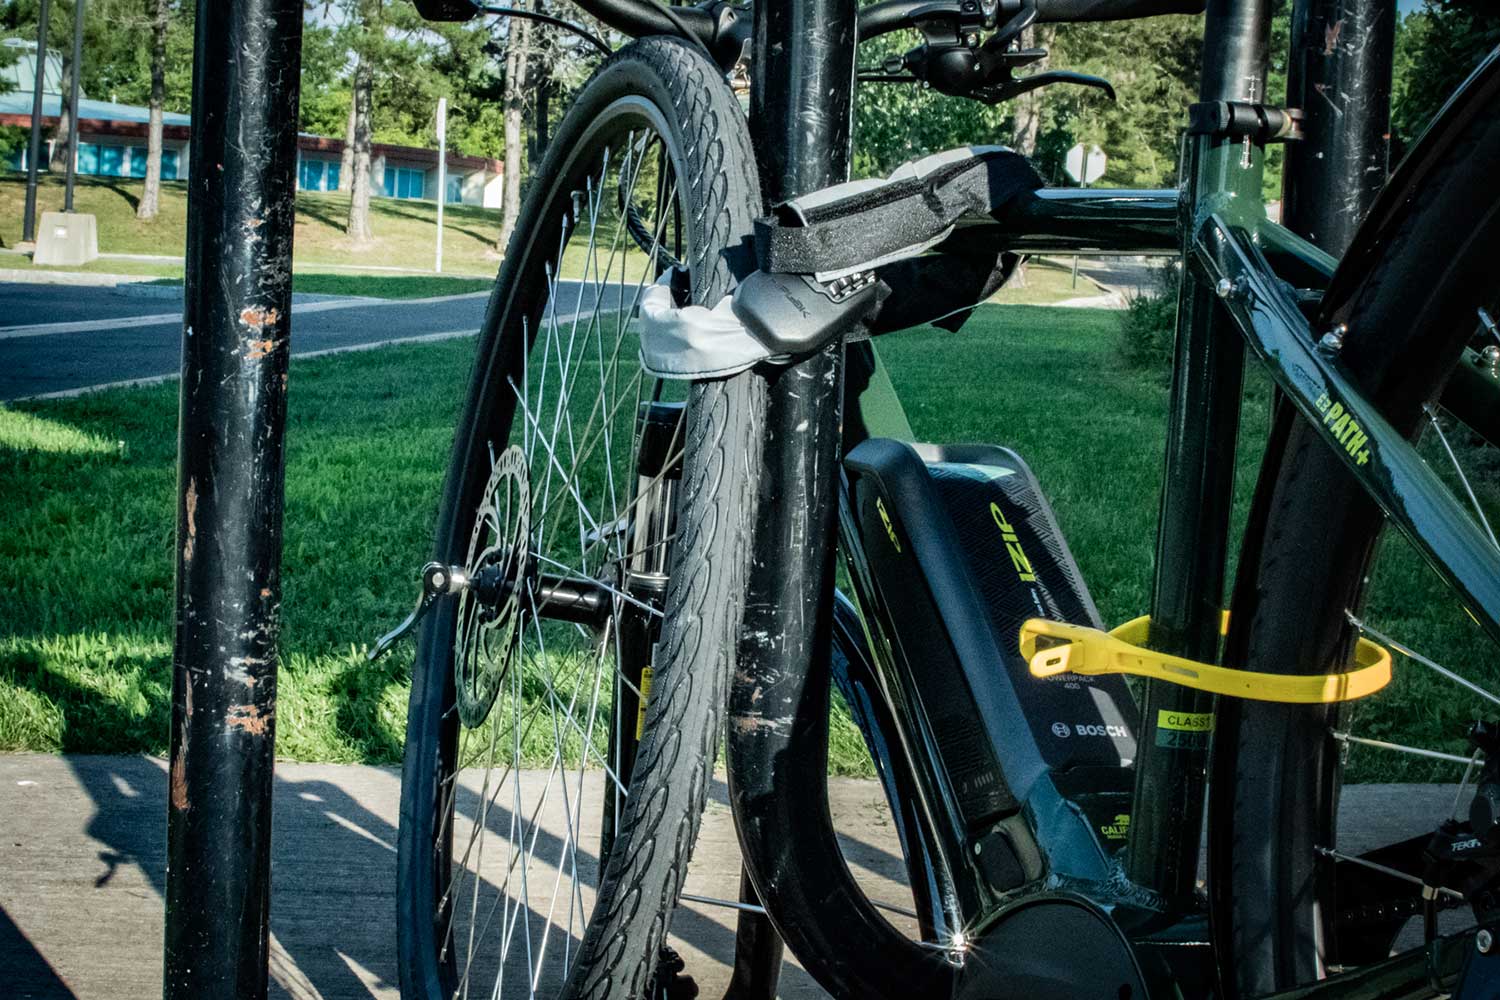 Multi-Functional Steel Bike Buddy For Bikes Cycle Lock Bicycle